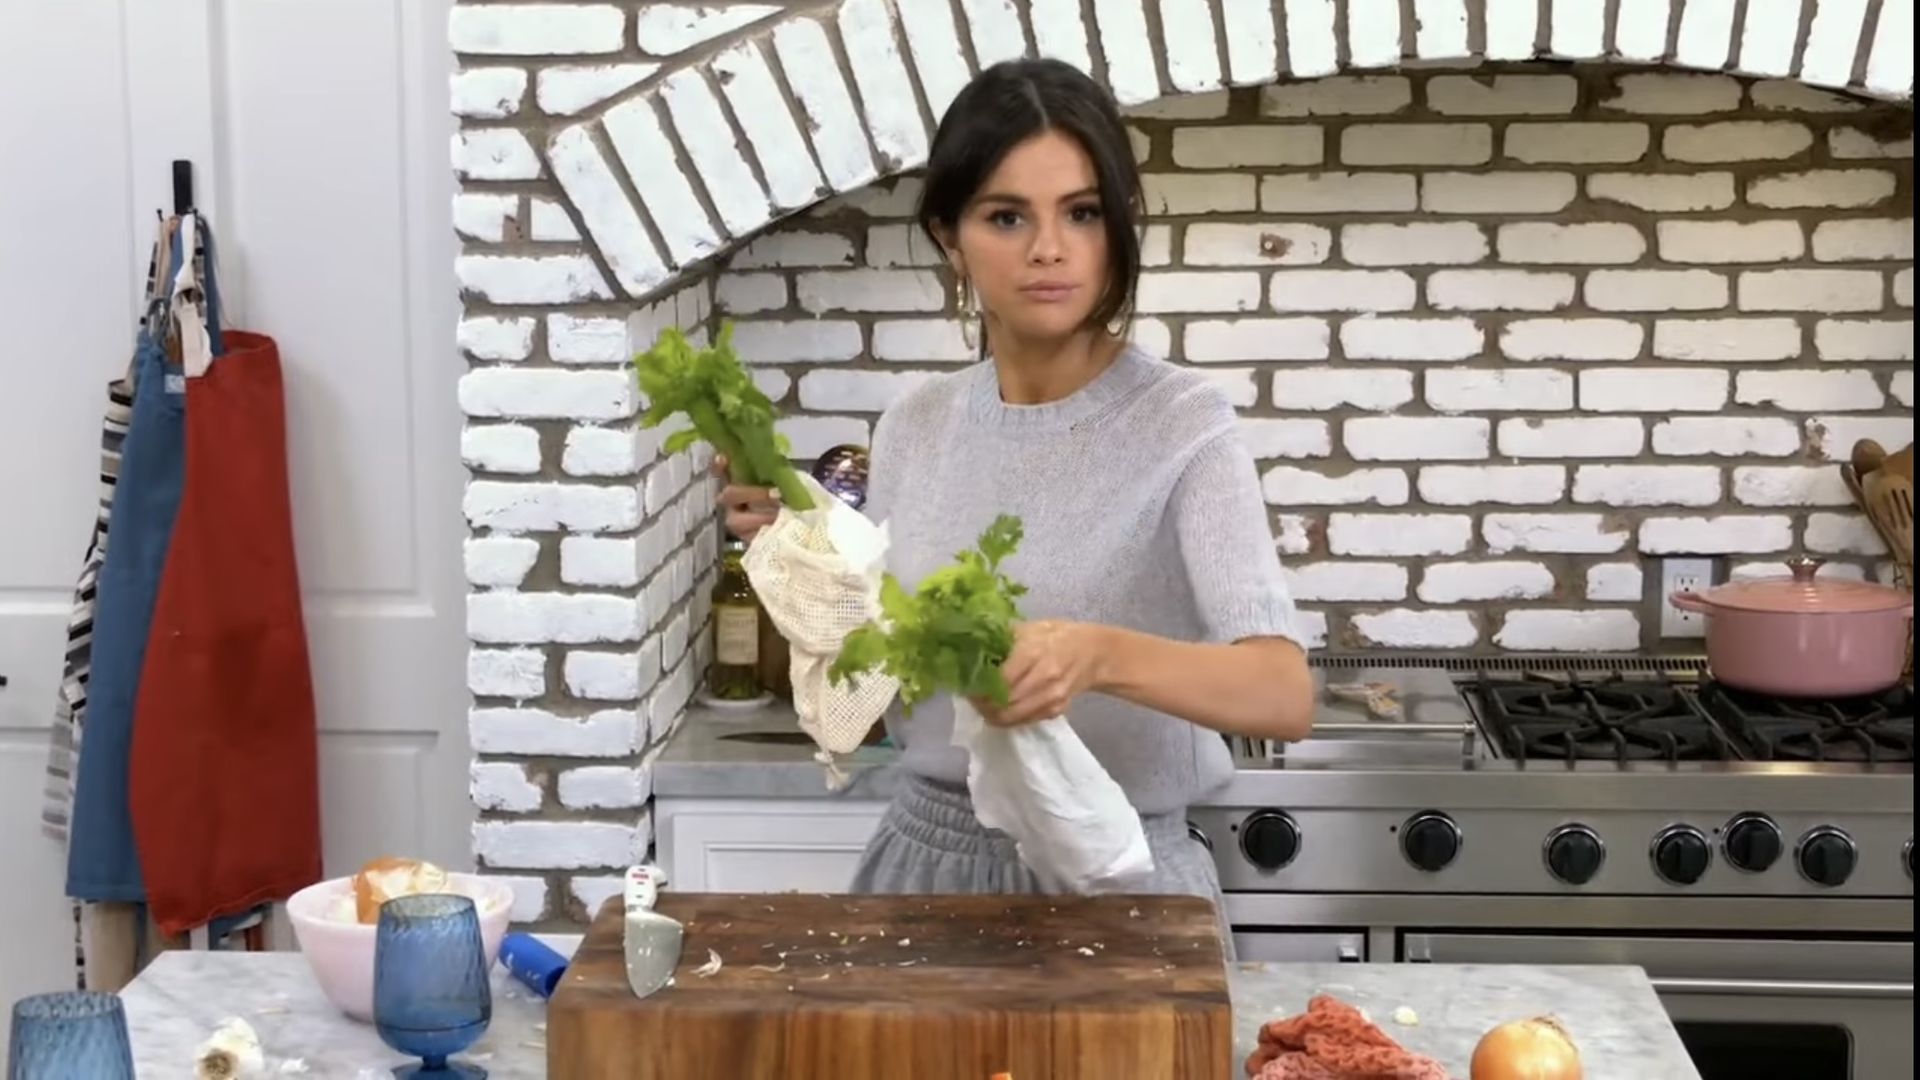 Selena + Chef background